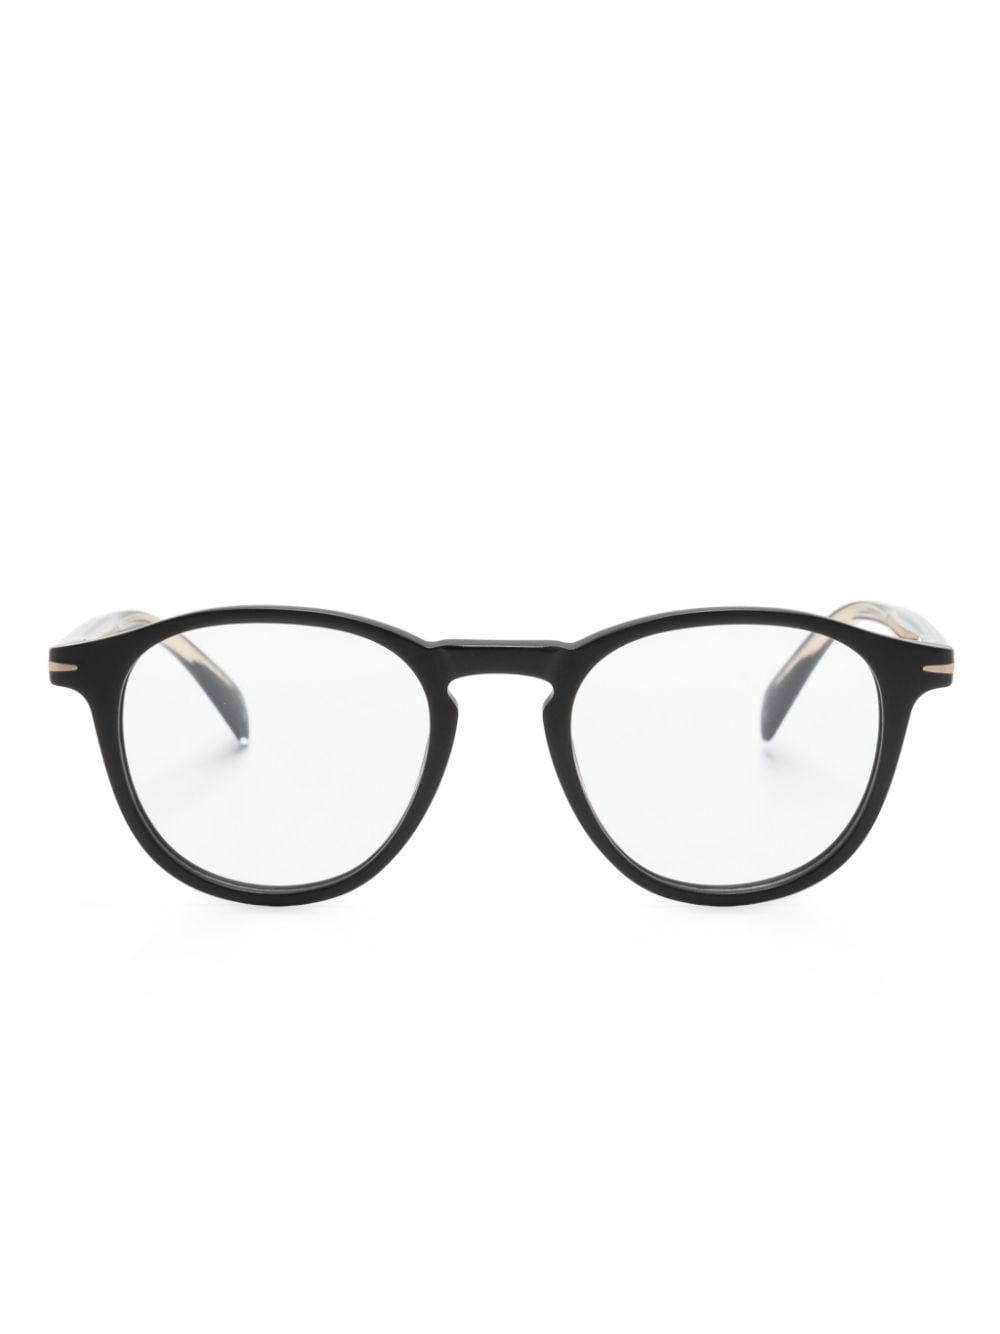 Eyewear by David Beckham round-frame glasses - Nero